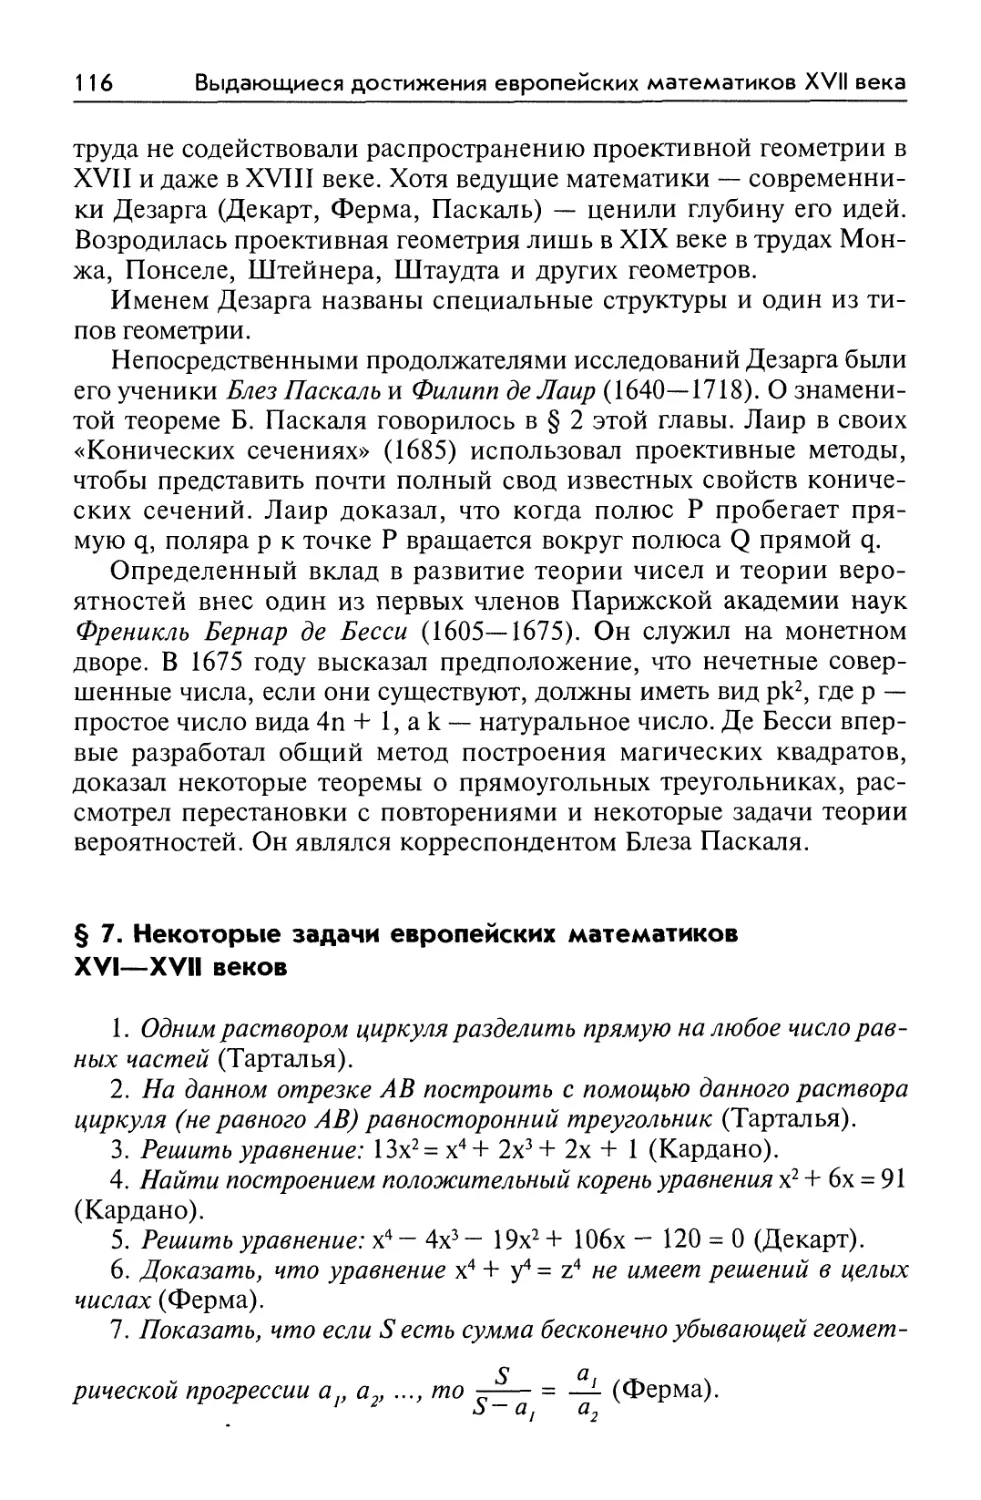 § 7. Некоторые задачи европейских математиков XVI—XV11 веков
§ 7. Some tasks of European mathematicians of XVI—XVII centuries